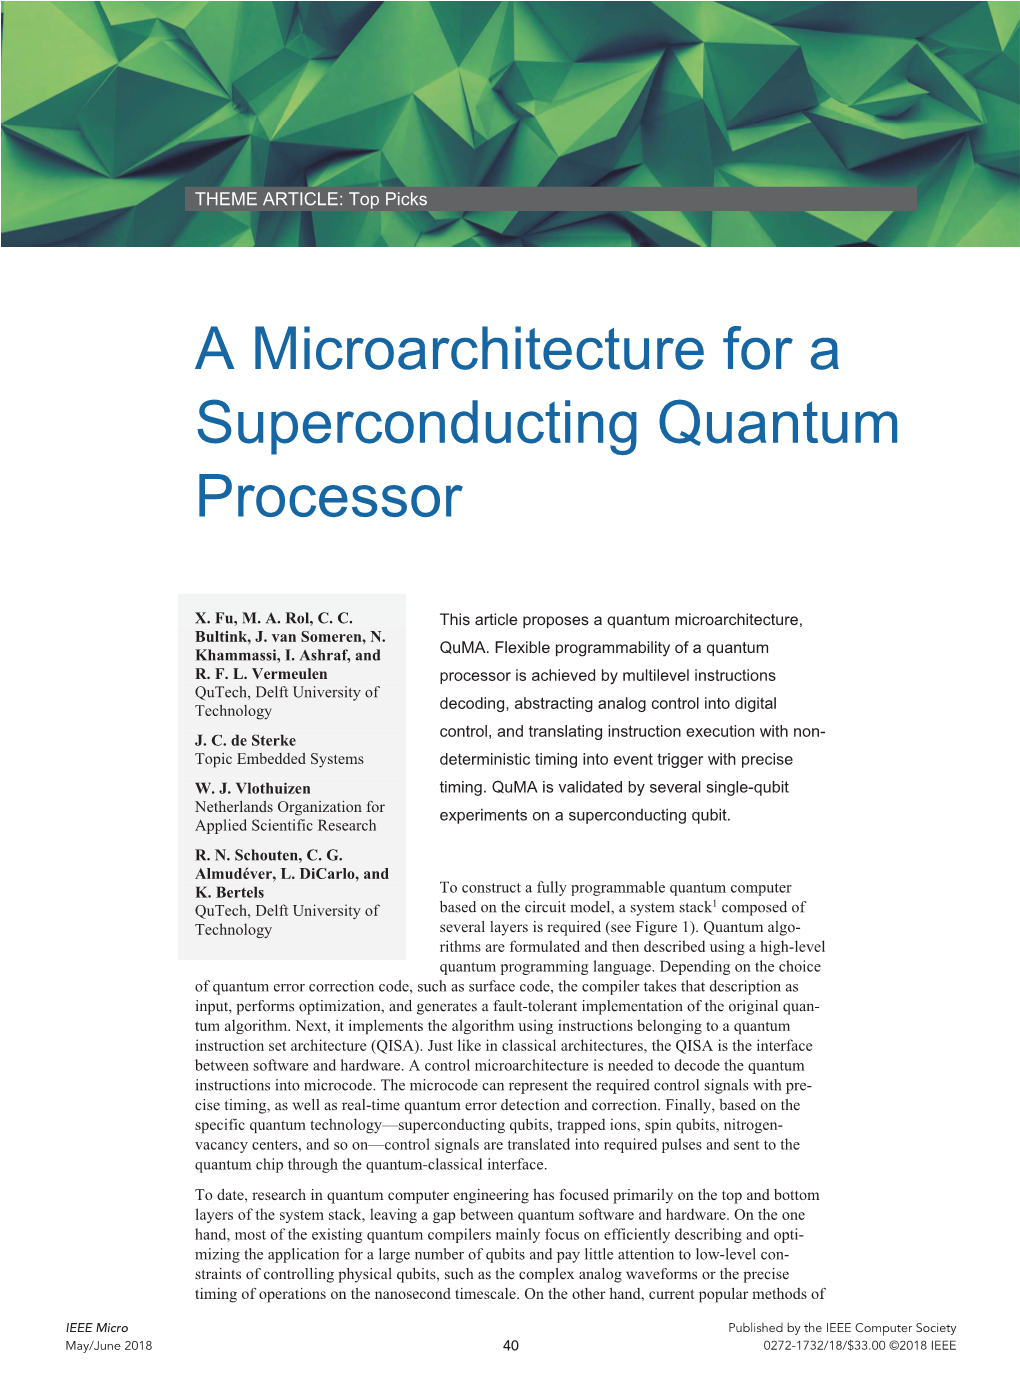 A Microarchitecture for a Superconducting Quantum Processor